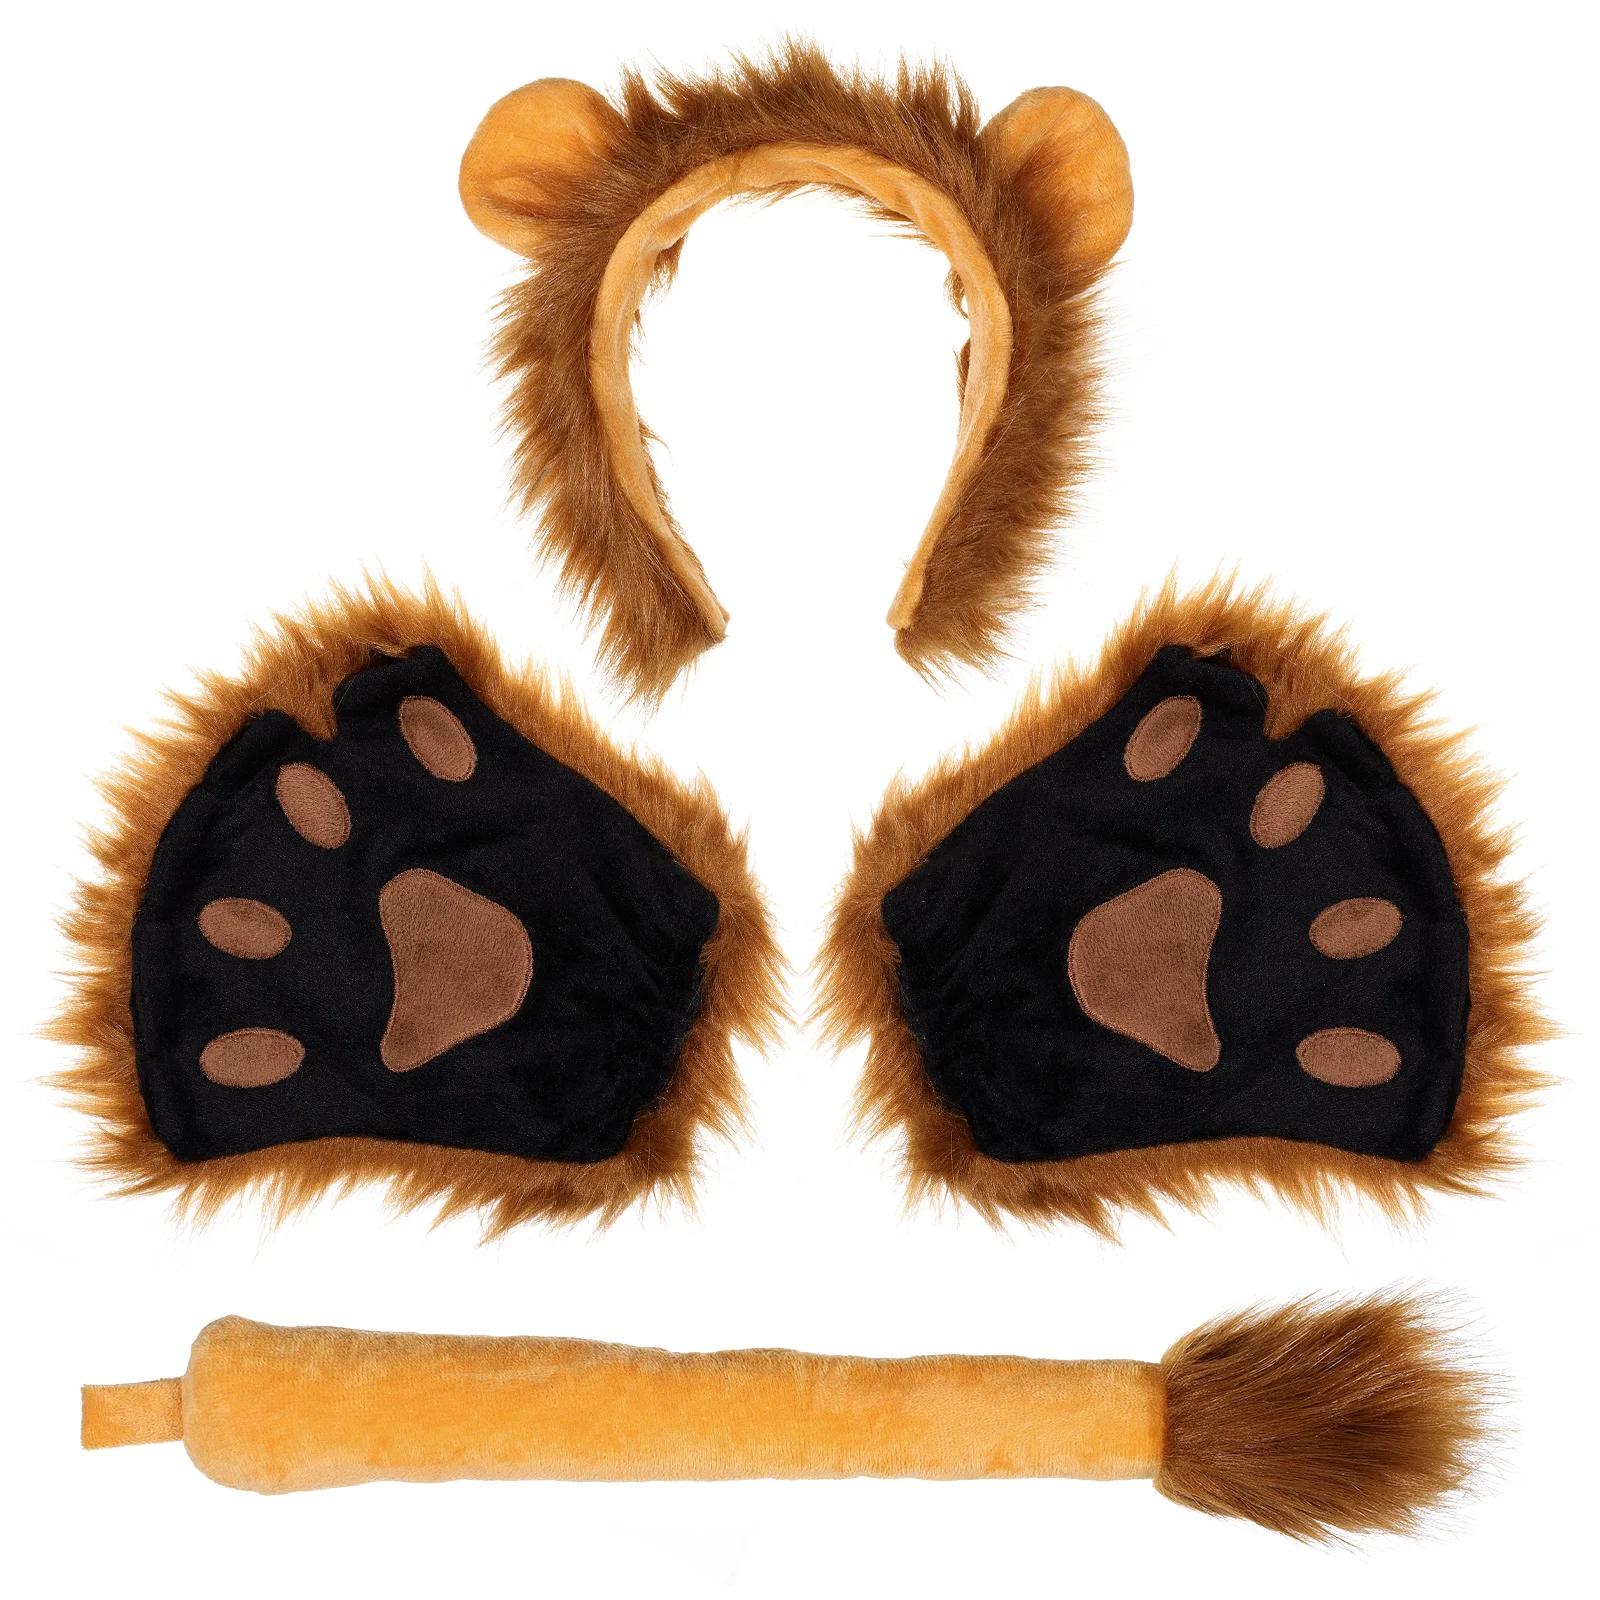 

Lion Tail Adornment Animal Ear Headband Headbands Hairy Costume Paw Gloves Cosplay Accessory Child Stuffed Animals Adults